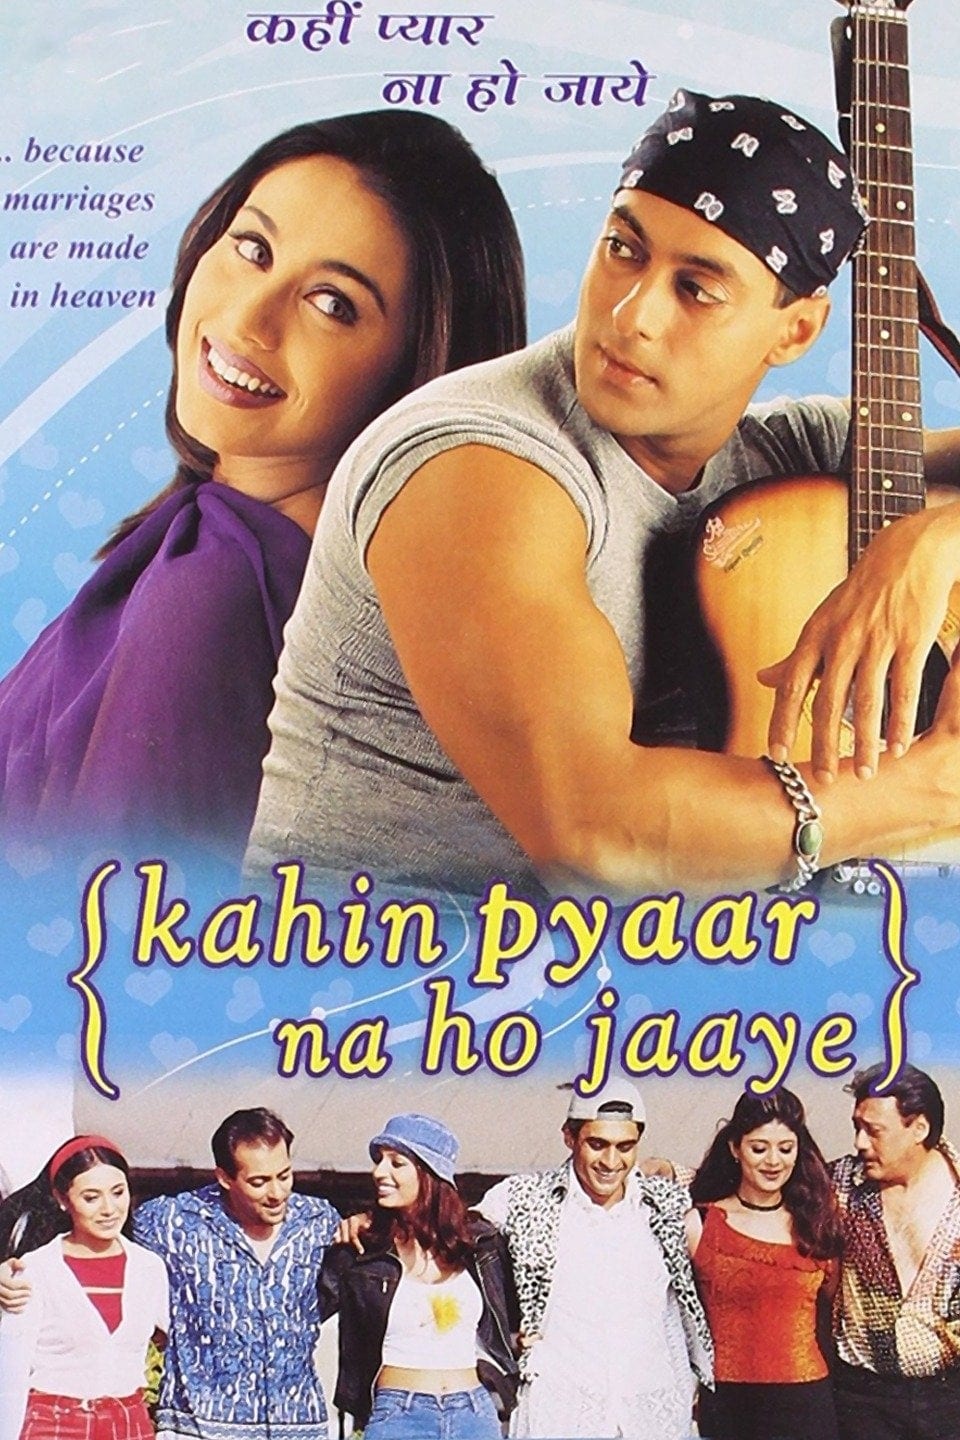 Poster for the movie "Kahin Pyaar Na Ho Jaaye"